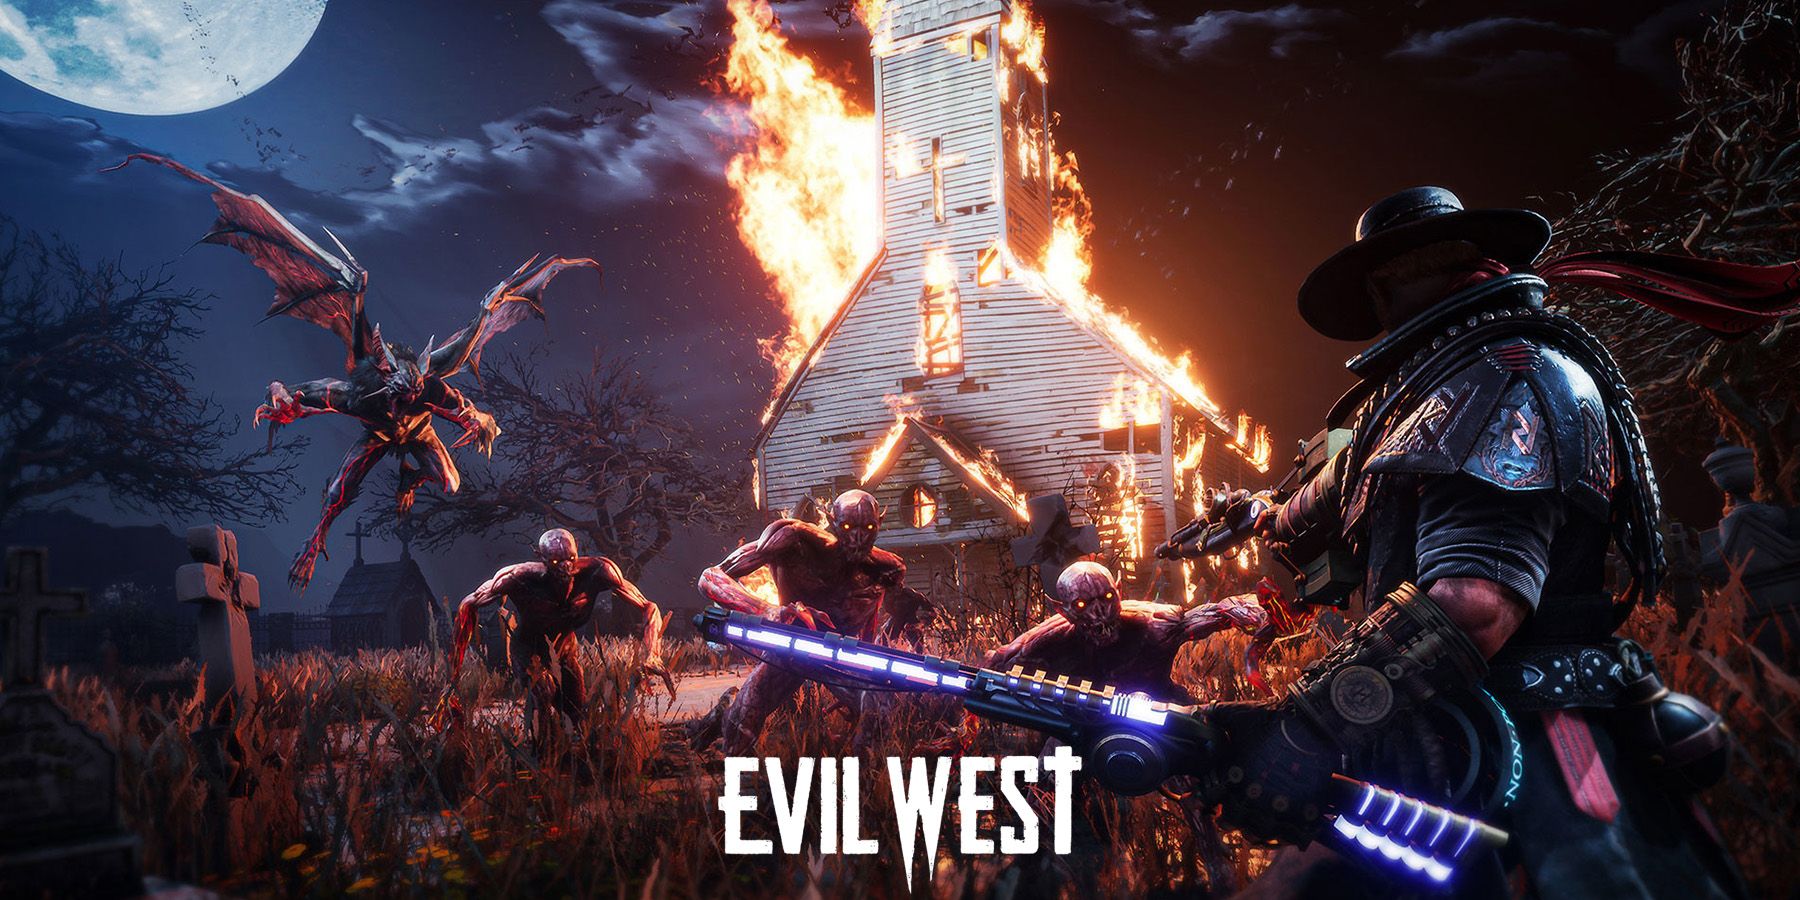 Evil West burning church nighttime demon fight gameplay screenshot with white game logo